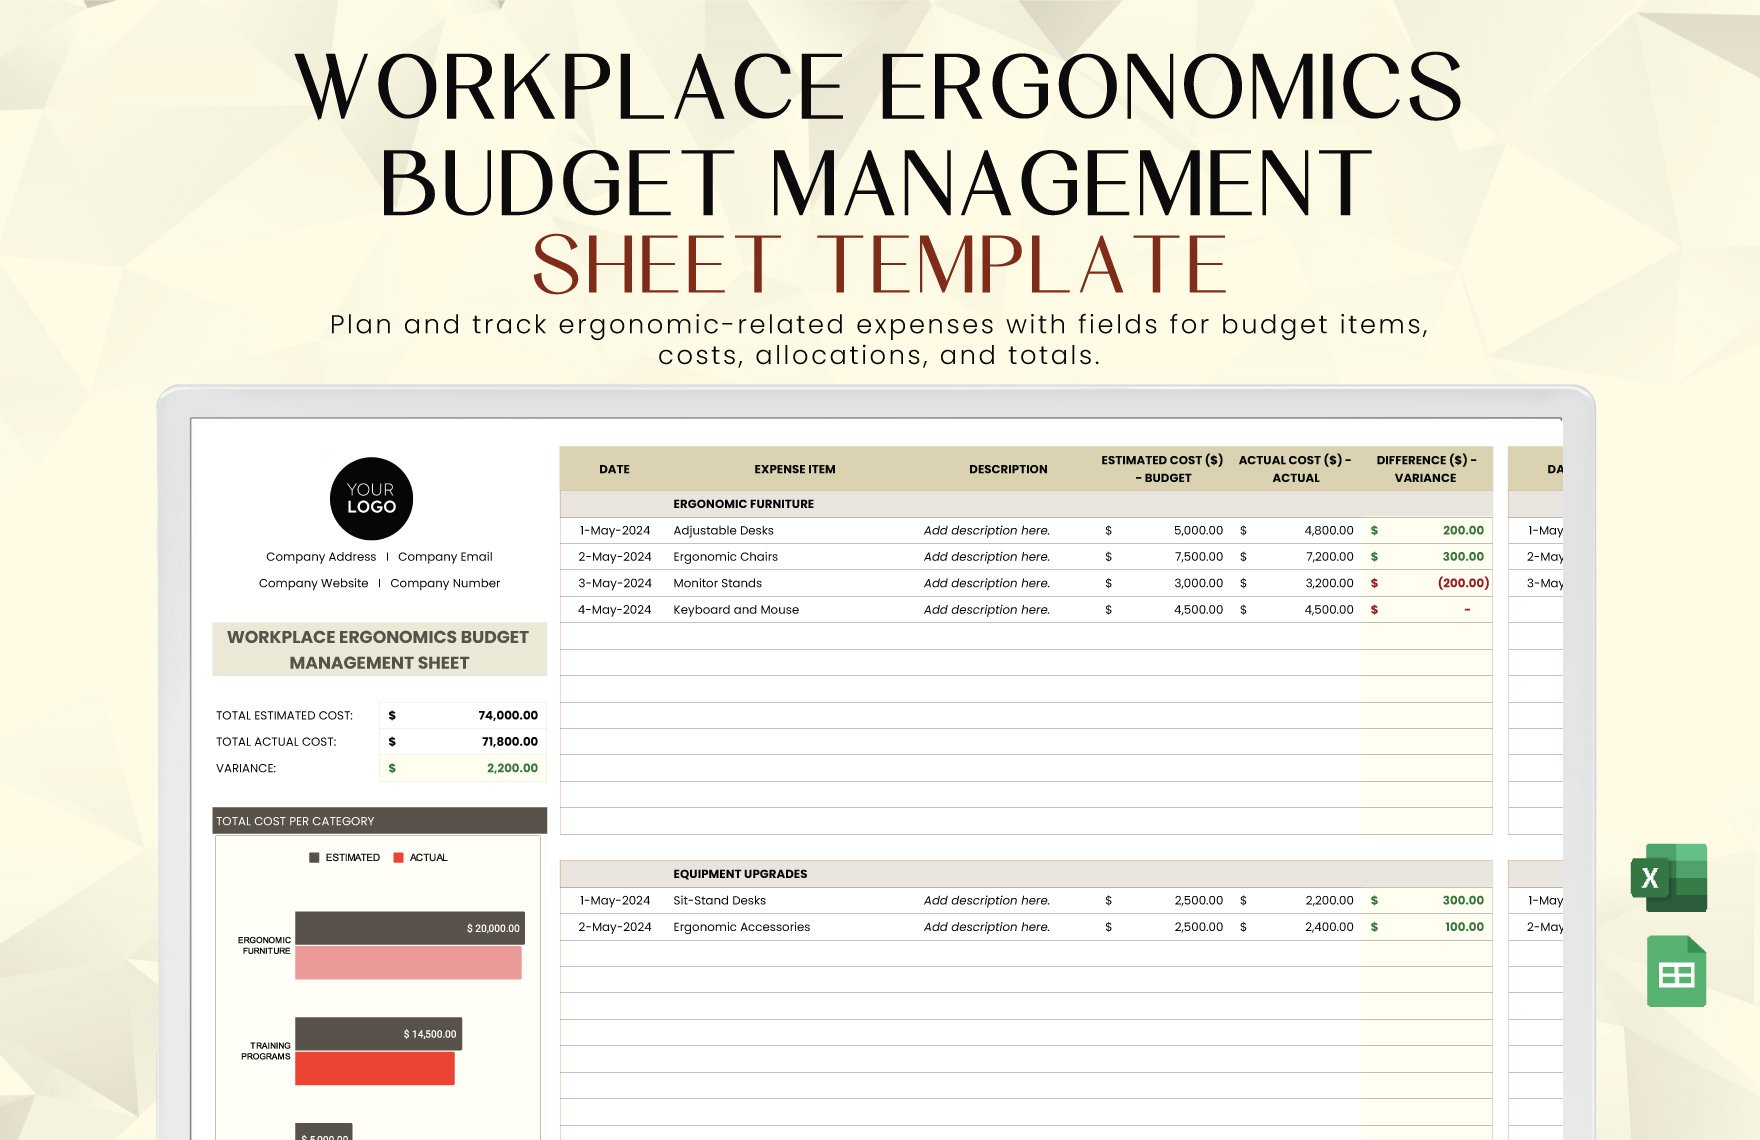 Workplace Ergonomics Budget Management Sheet Template in Excel, Google Sheets